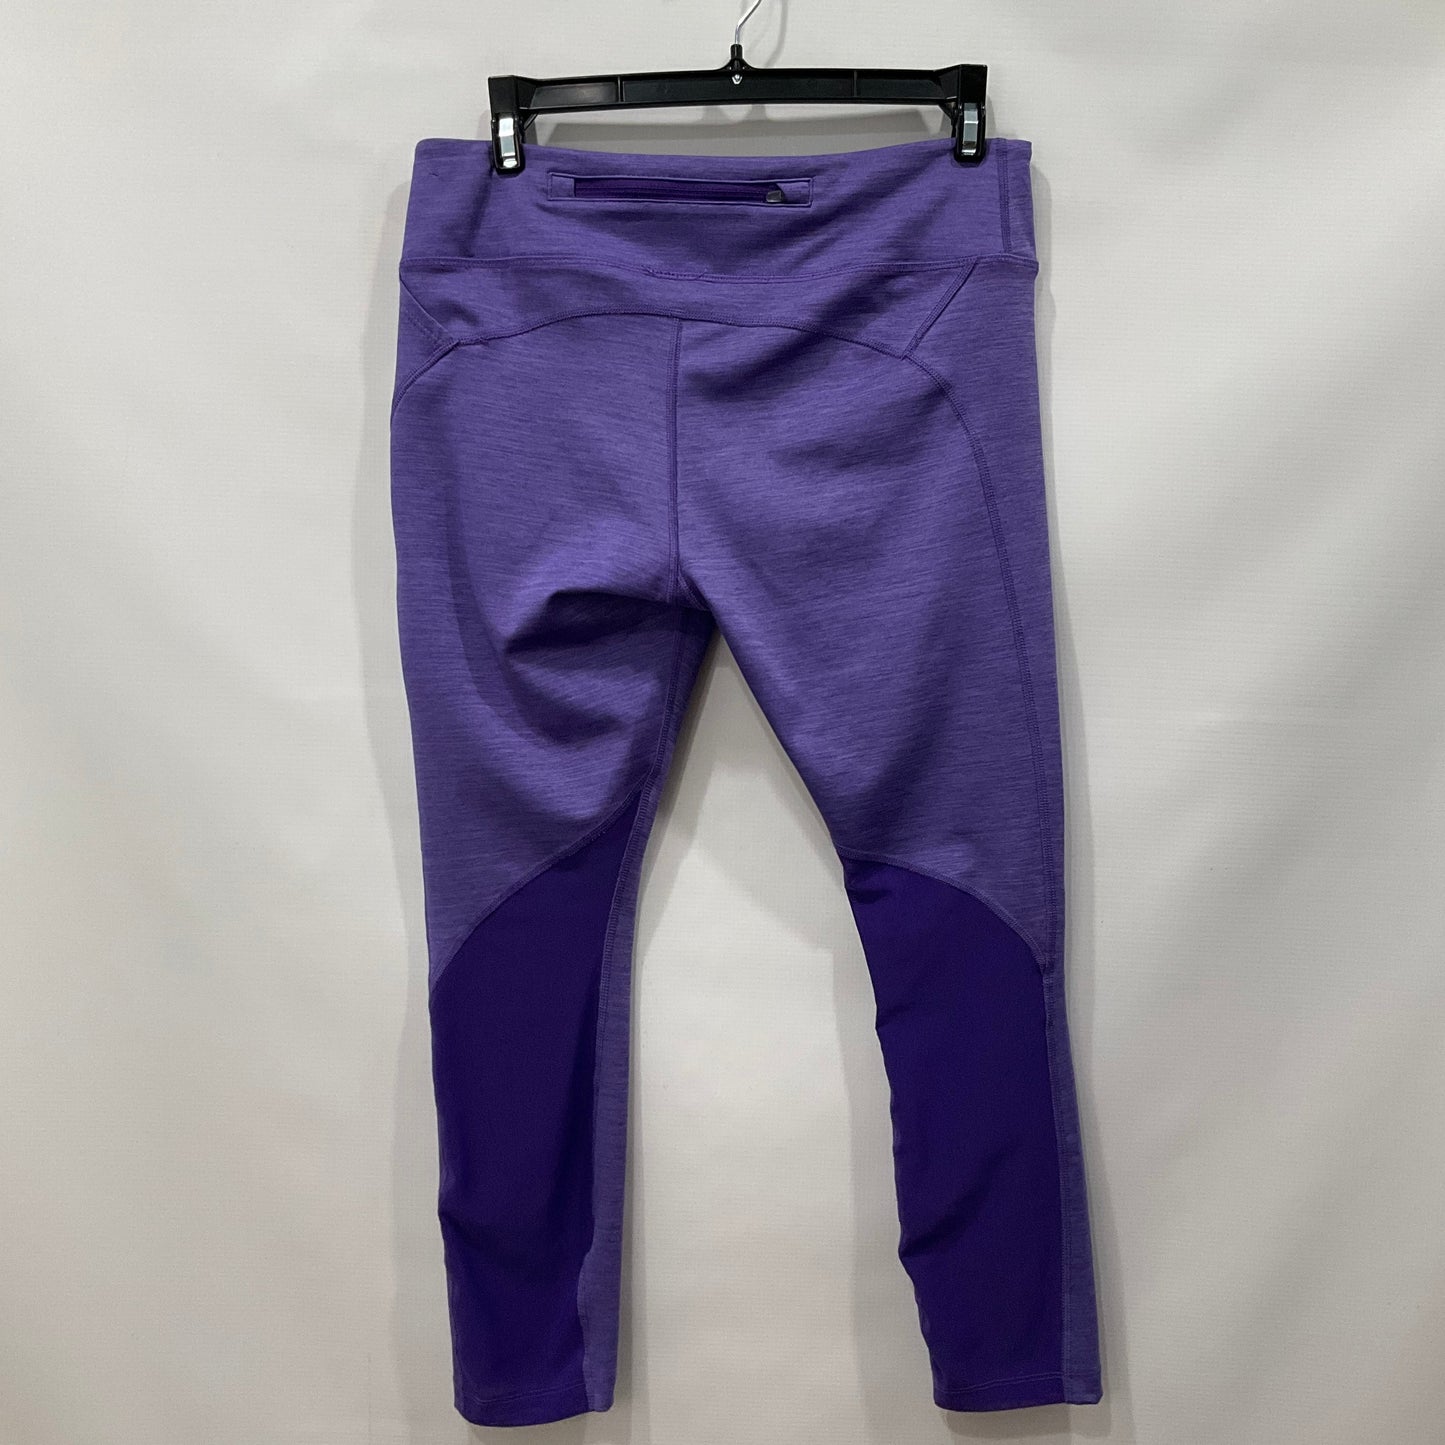 Purple Athletic Leggings Nike, Size L